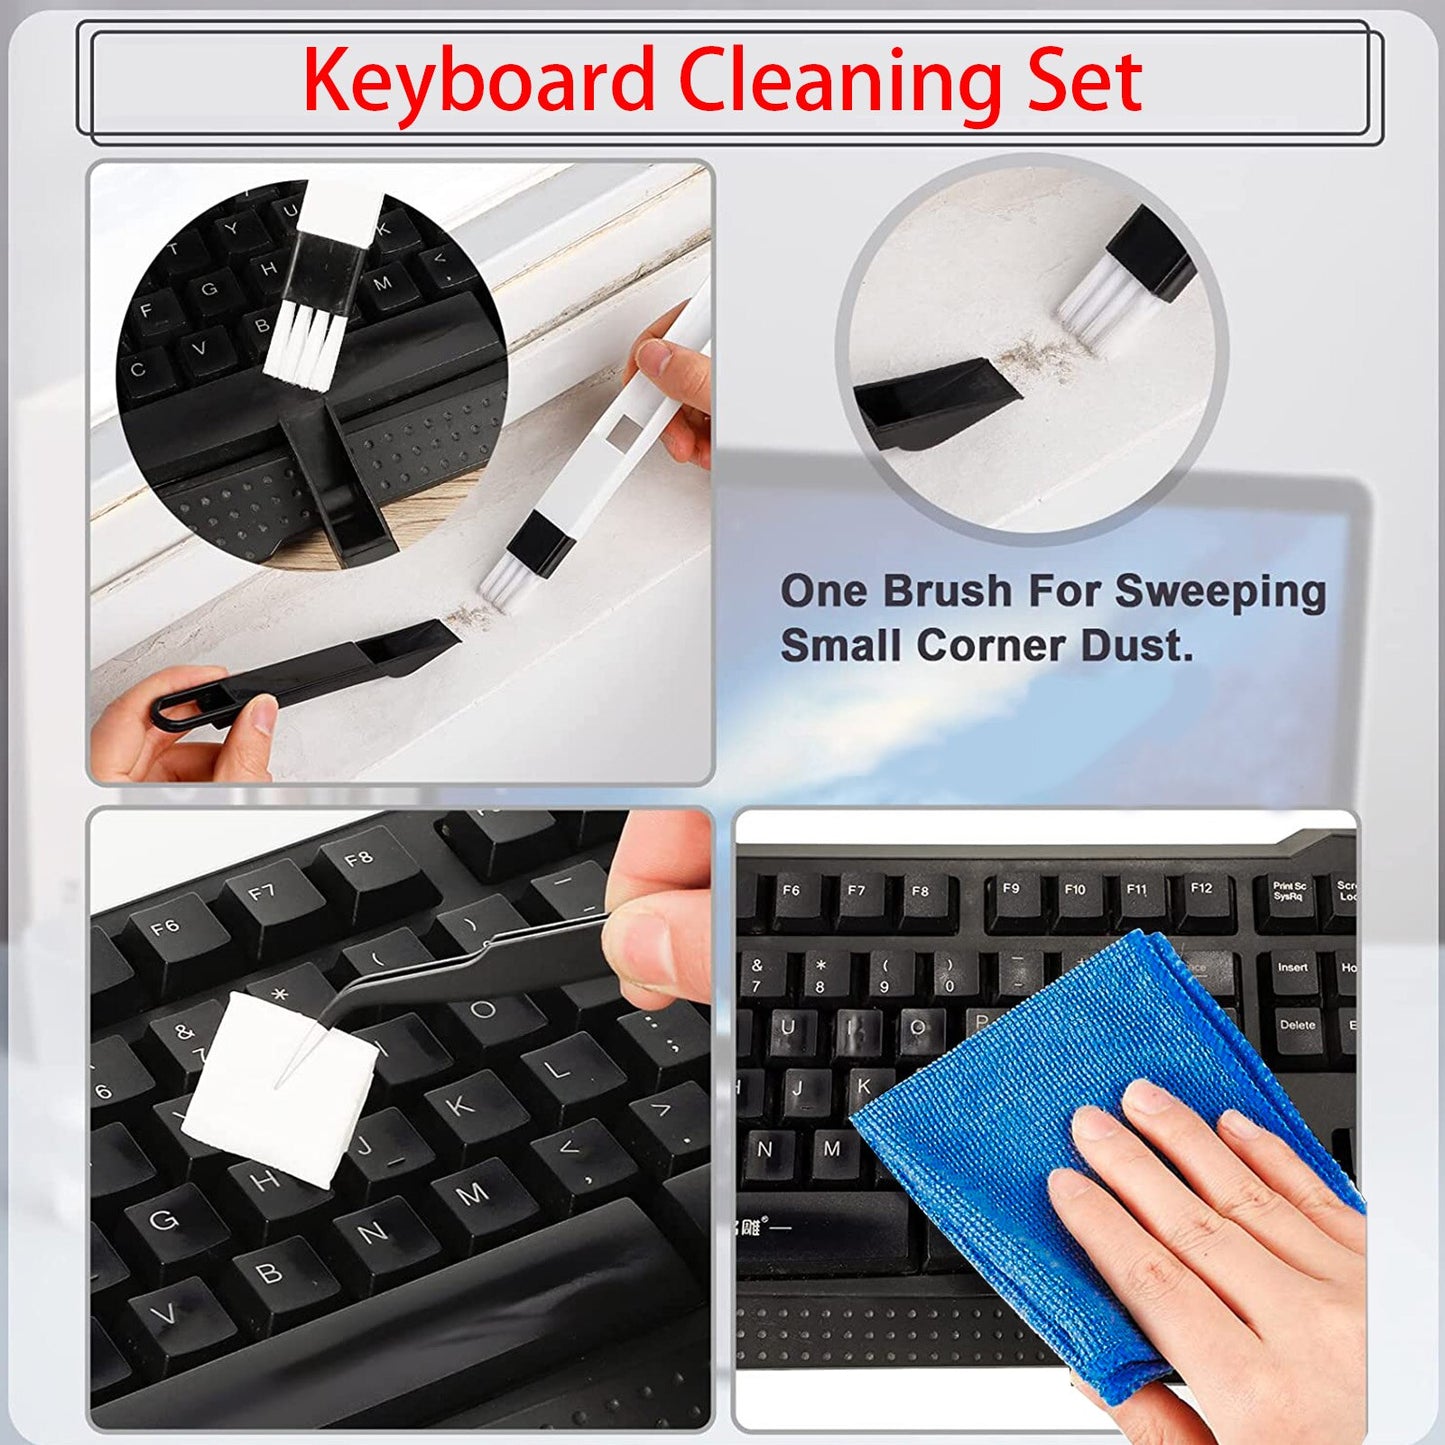 Keyboard Cleaning Kit